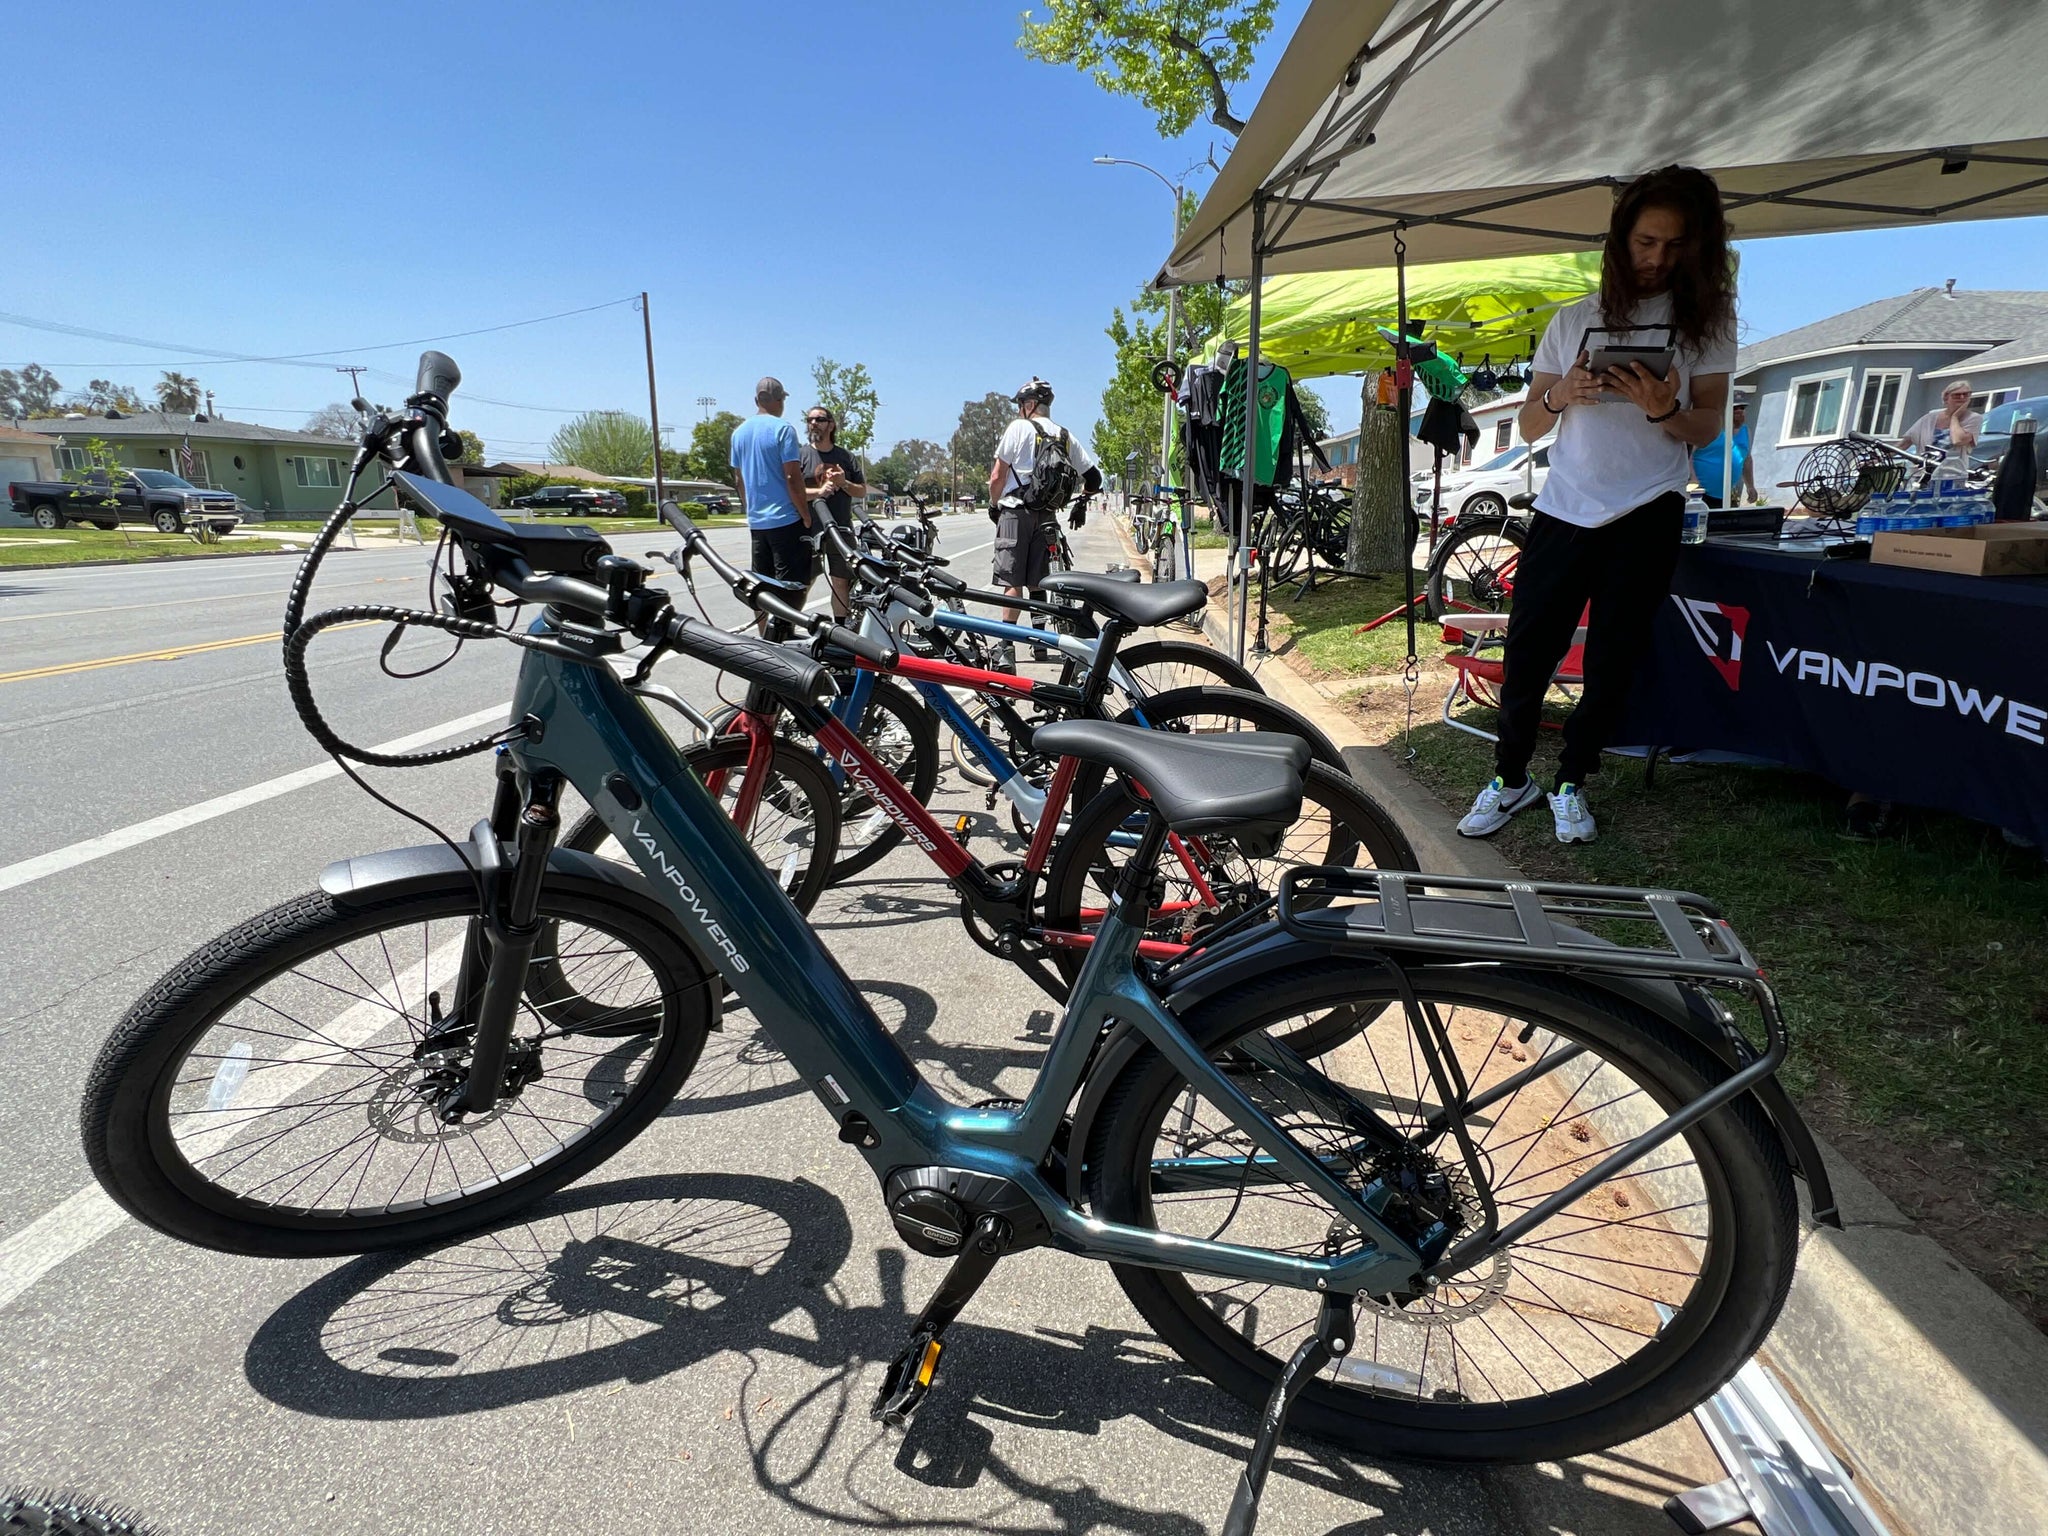 Vanpowers Debuts New Urban Glide e-Bike at Offline Test Ride Event